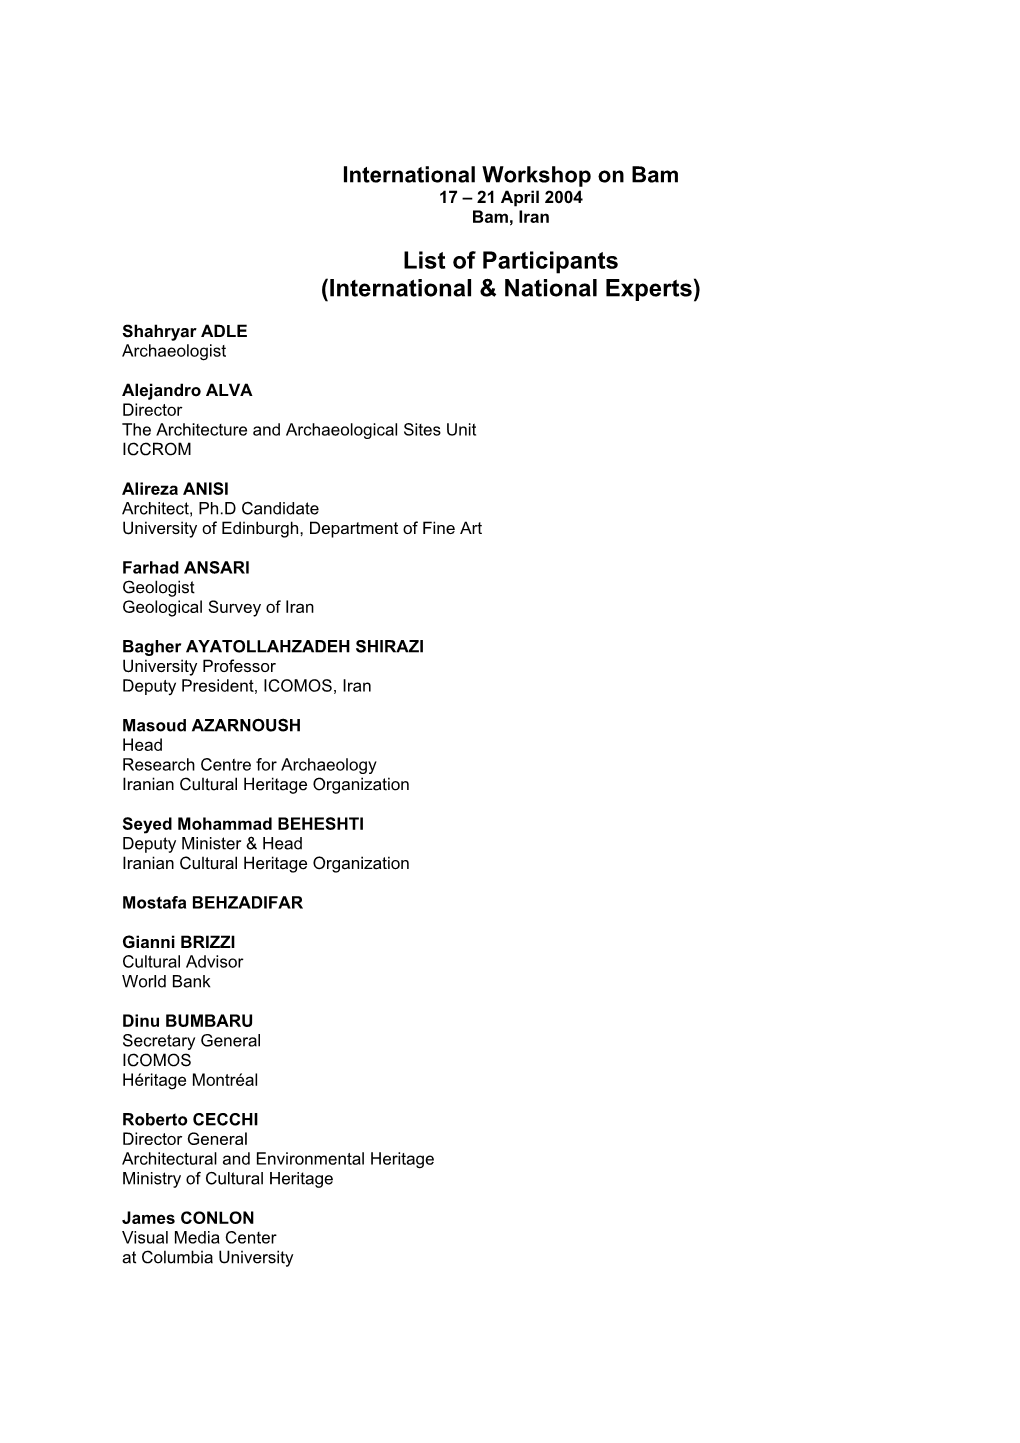 List of Participants (International & National Experts)